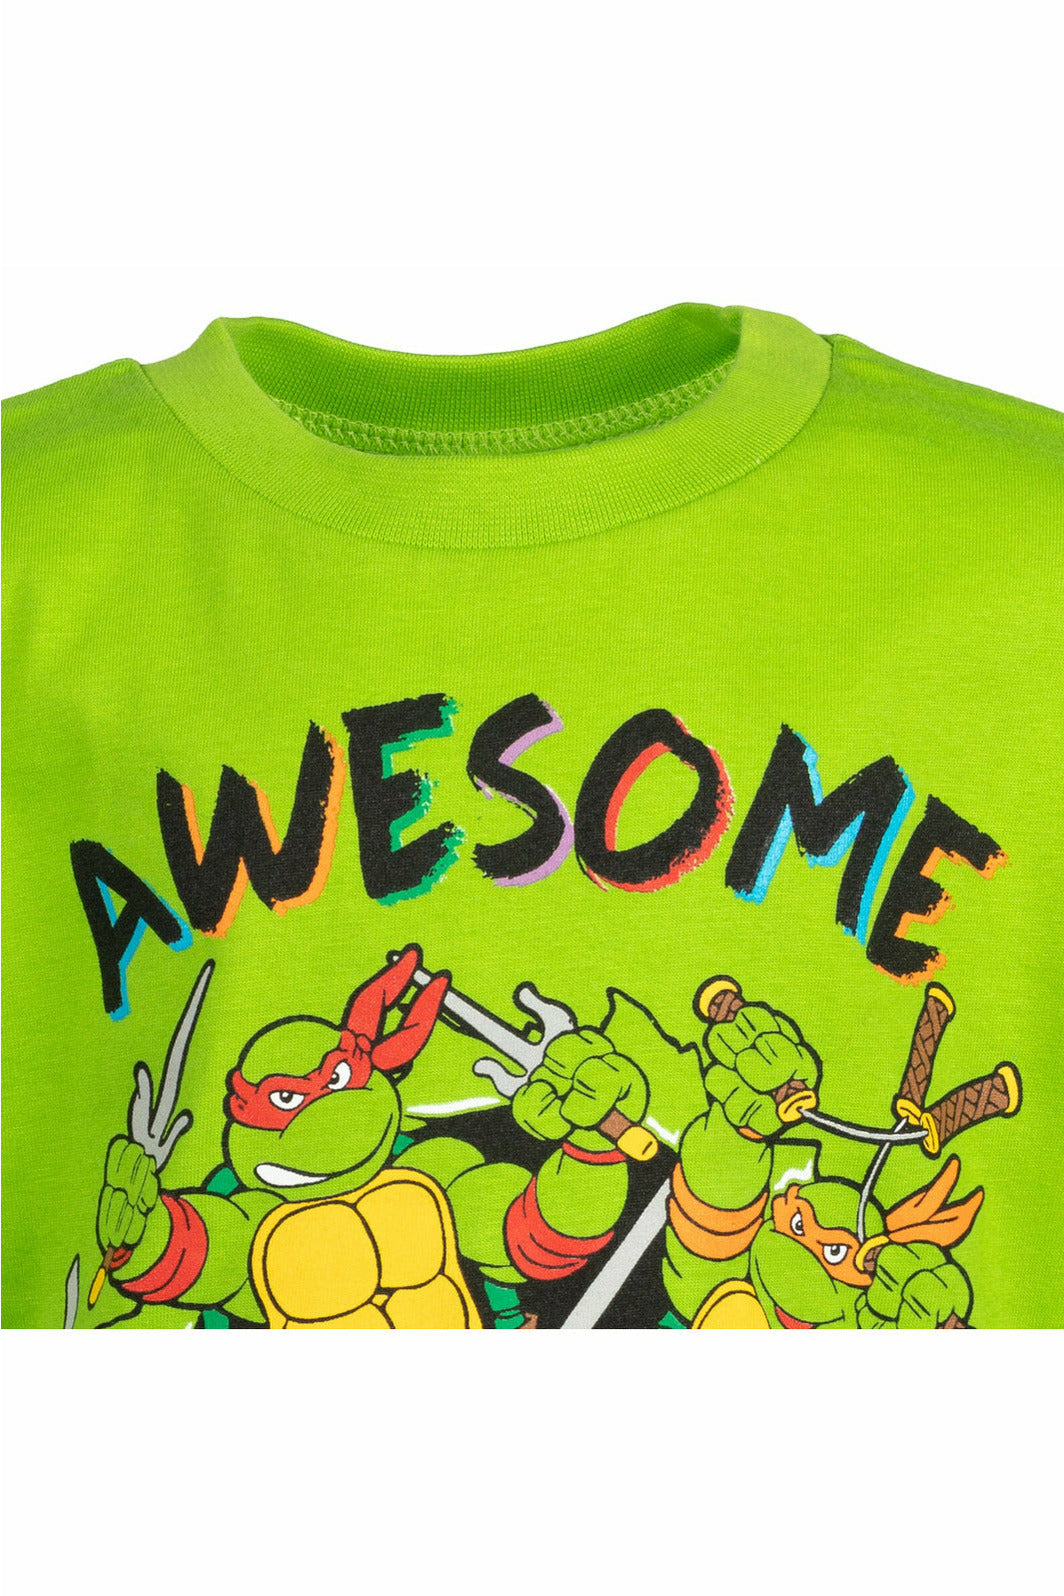 Teenage Mutant Ninja Turtles Donatello Michelangelo Raphael Leonardo Toddler Boys T-Shirt Mesh Shorts 5T